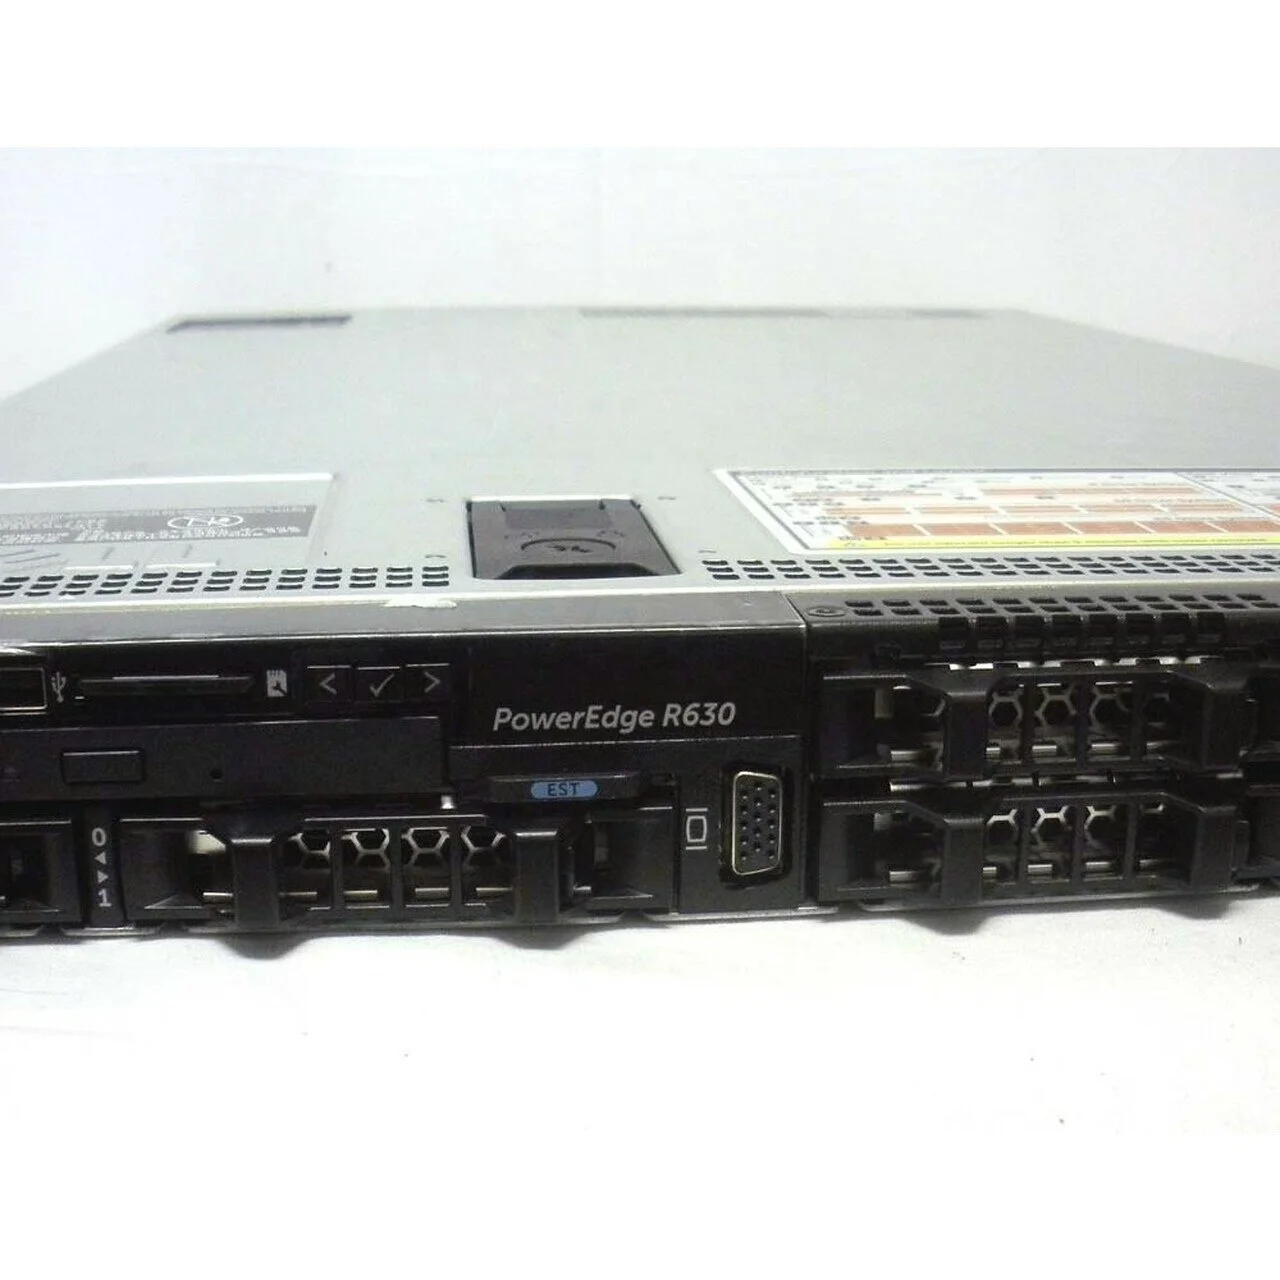 

Dell PowerEdge R630 1U Rack Server Intel Xeon E5-2600 V3 Series CPU server